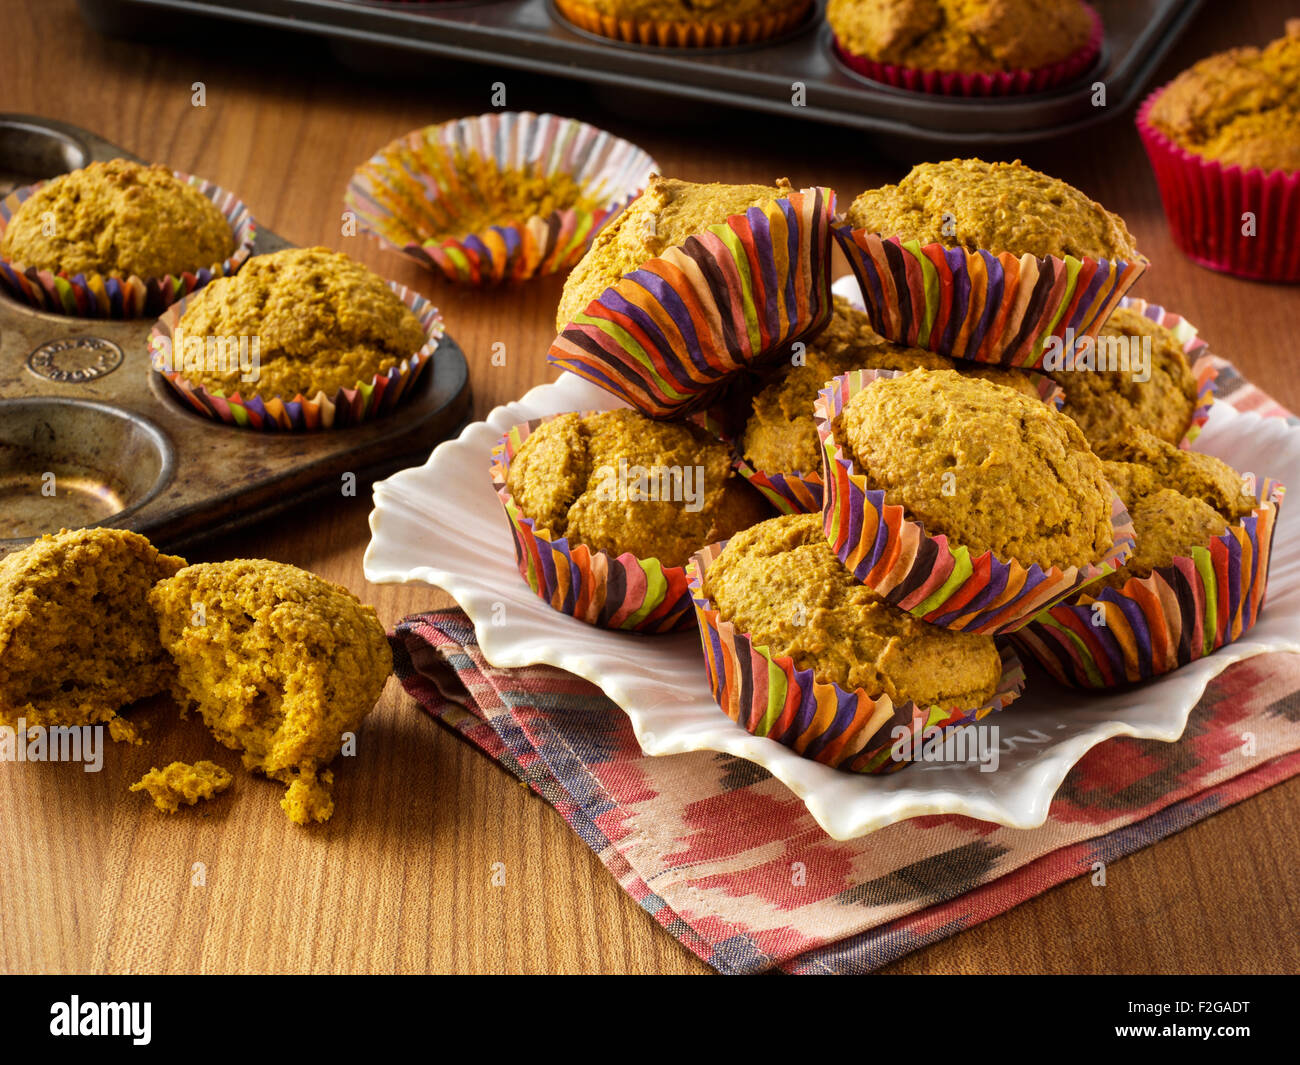 Sugar free bran muffins Stock Photo